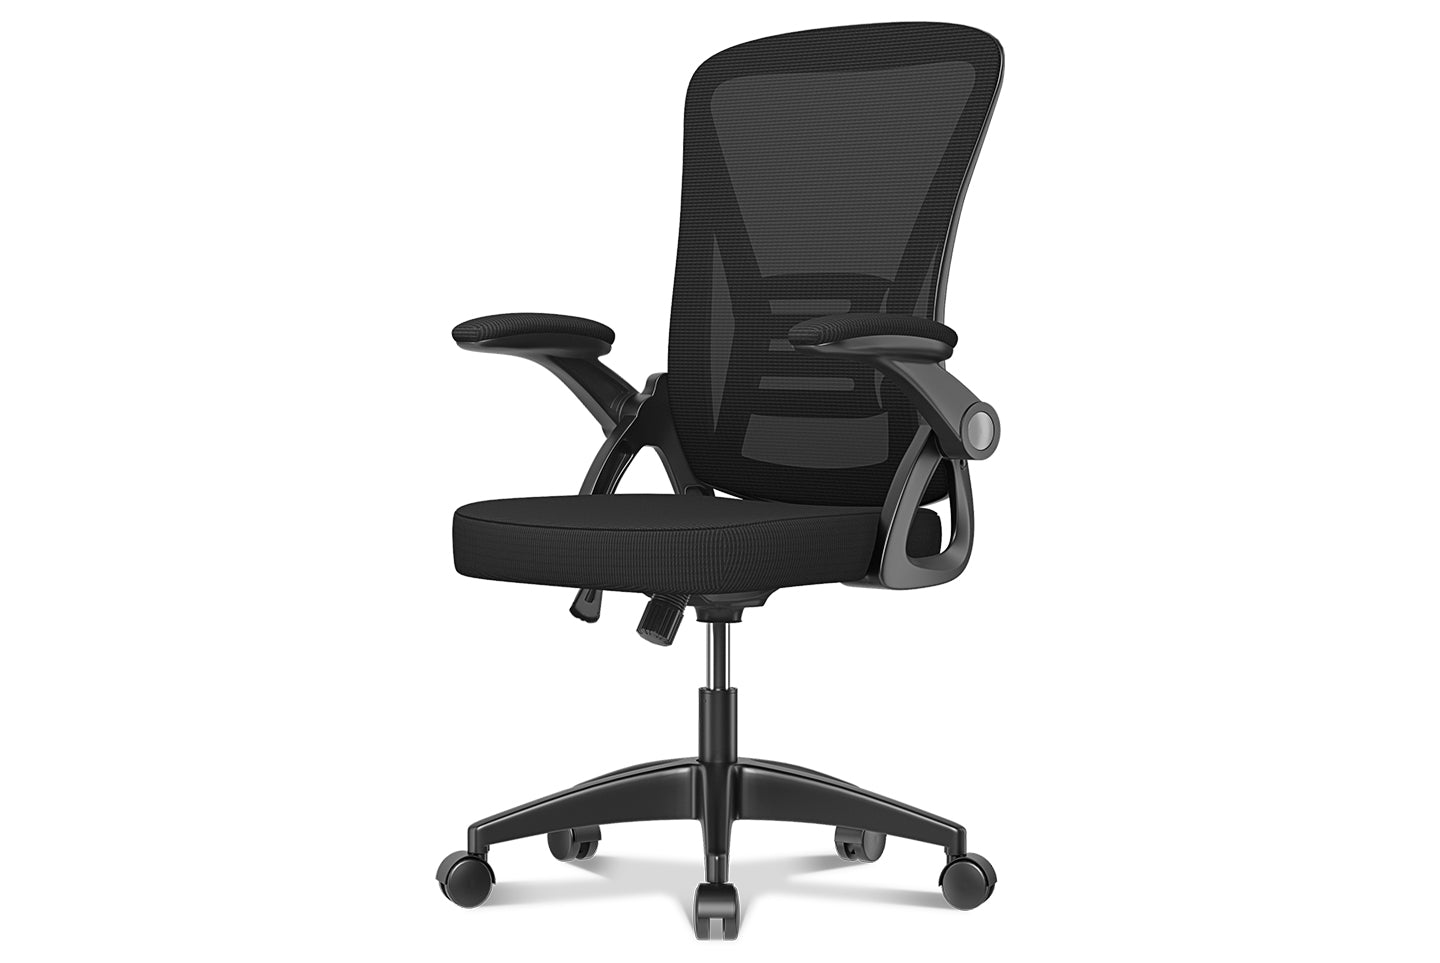 Durrafy Office Chair Ergonomic Desk Chair, With 90° Flip-up